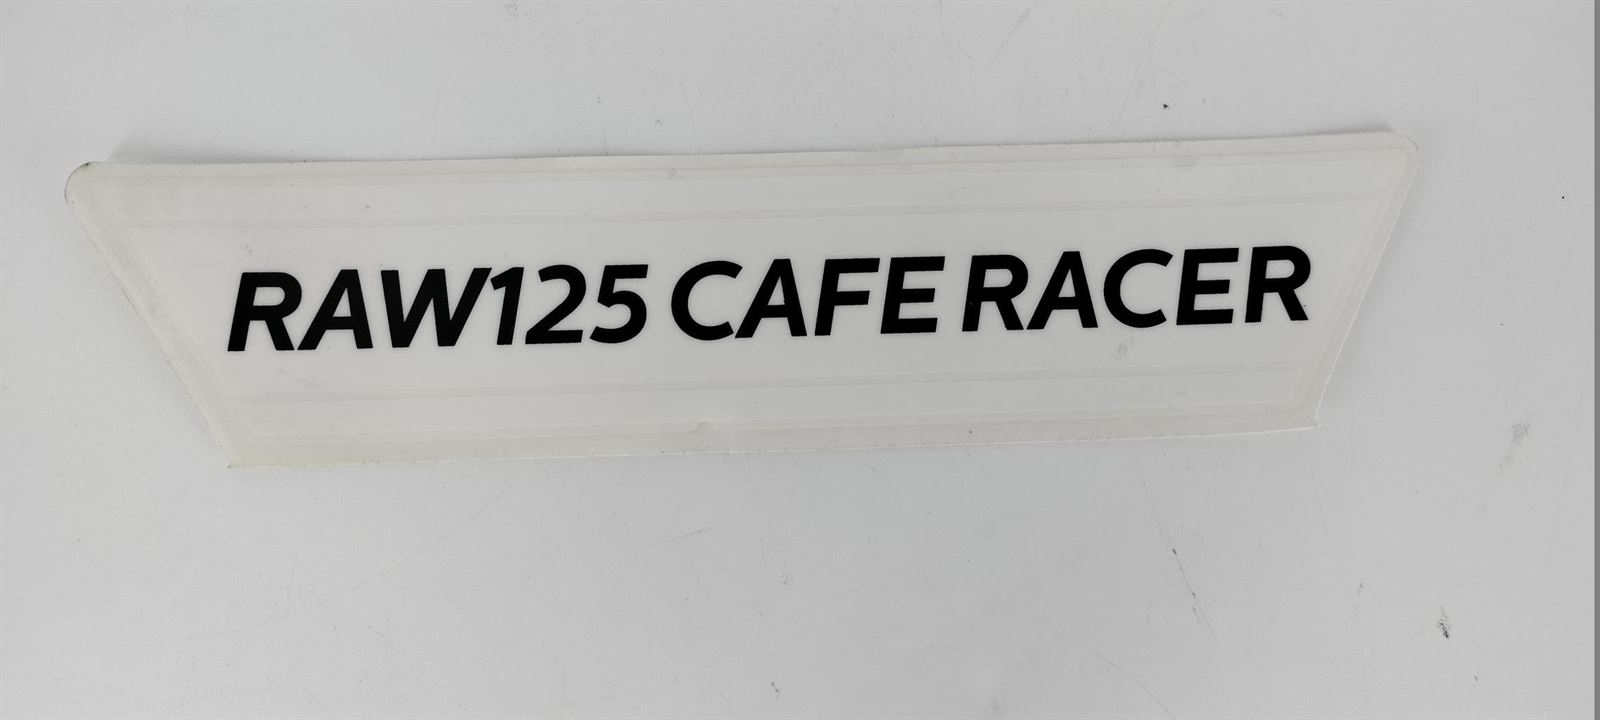 Adhesivo Hanway "Raw 125 Cafe Racer" - Imagen 1